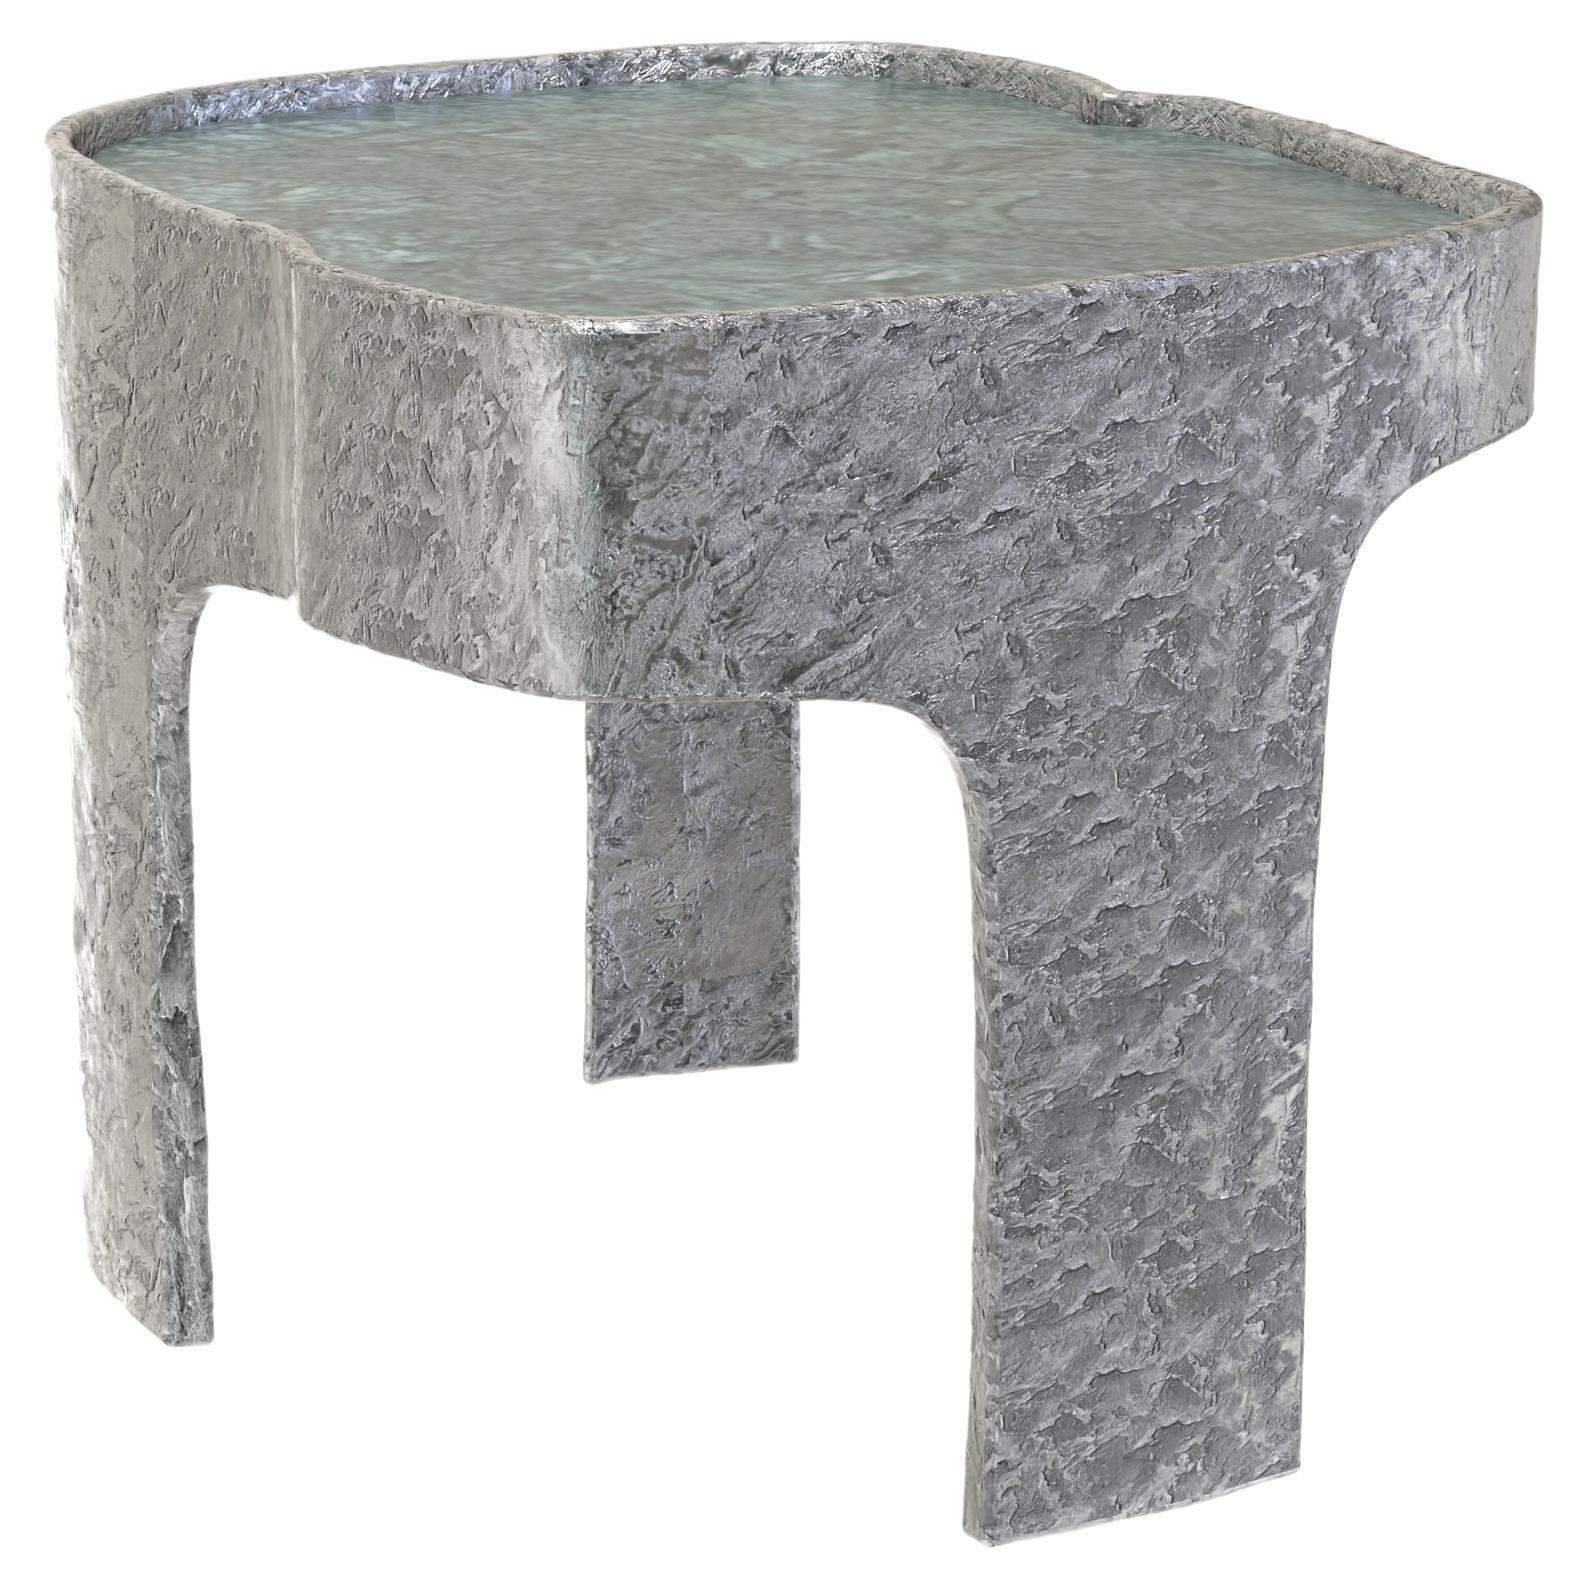 Limited Edition Marble Aluminium Table, Sumatra V1 by Edizione Limitata For Sale